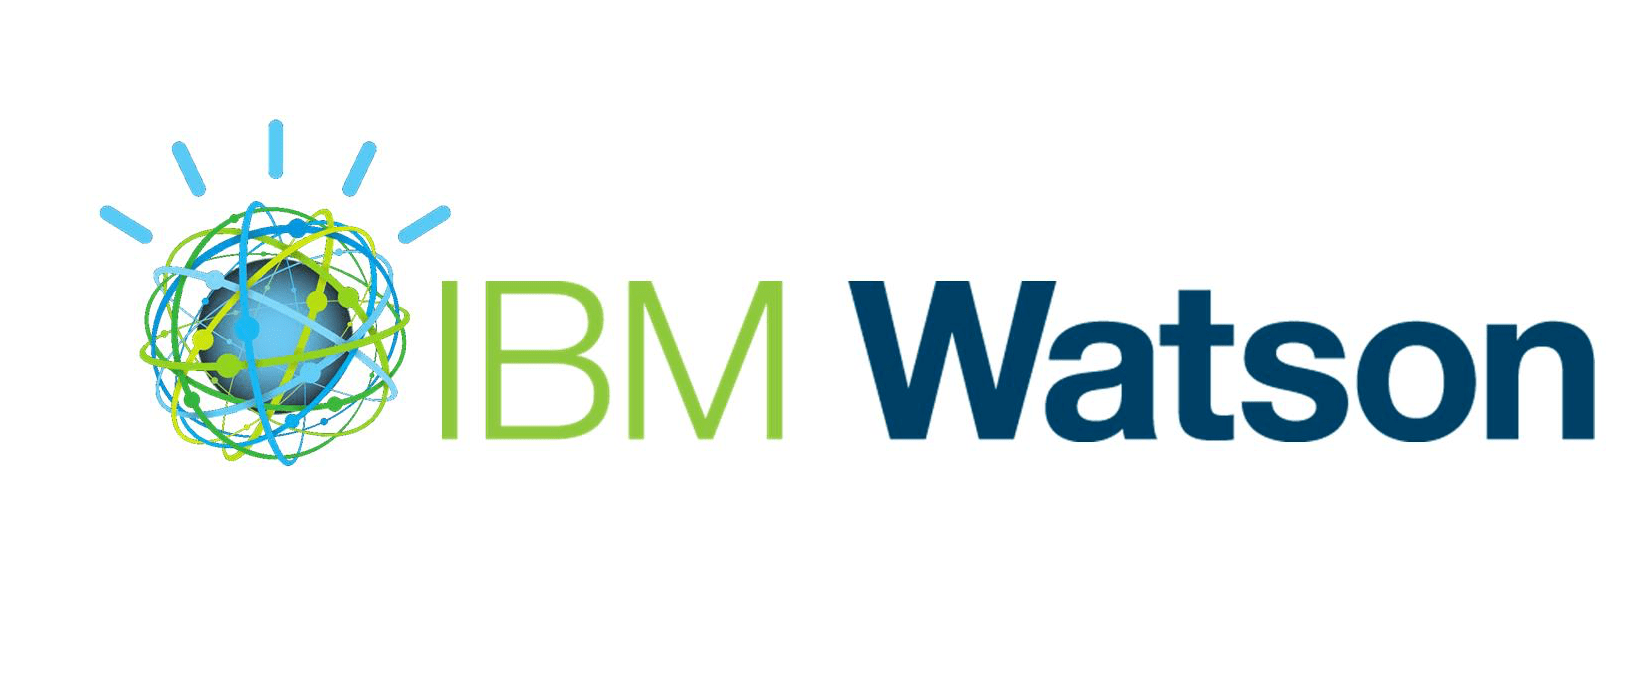 https://warrenenskat.com/wp-content/uploads/2019/01/Logo-IBM-Watson.png